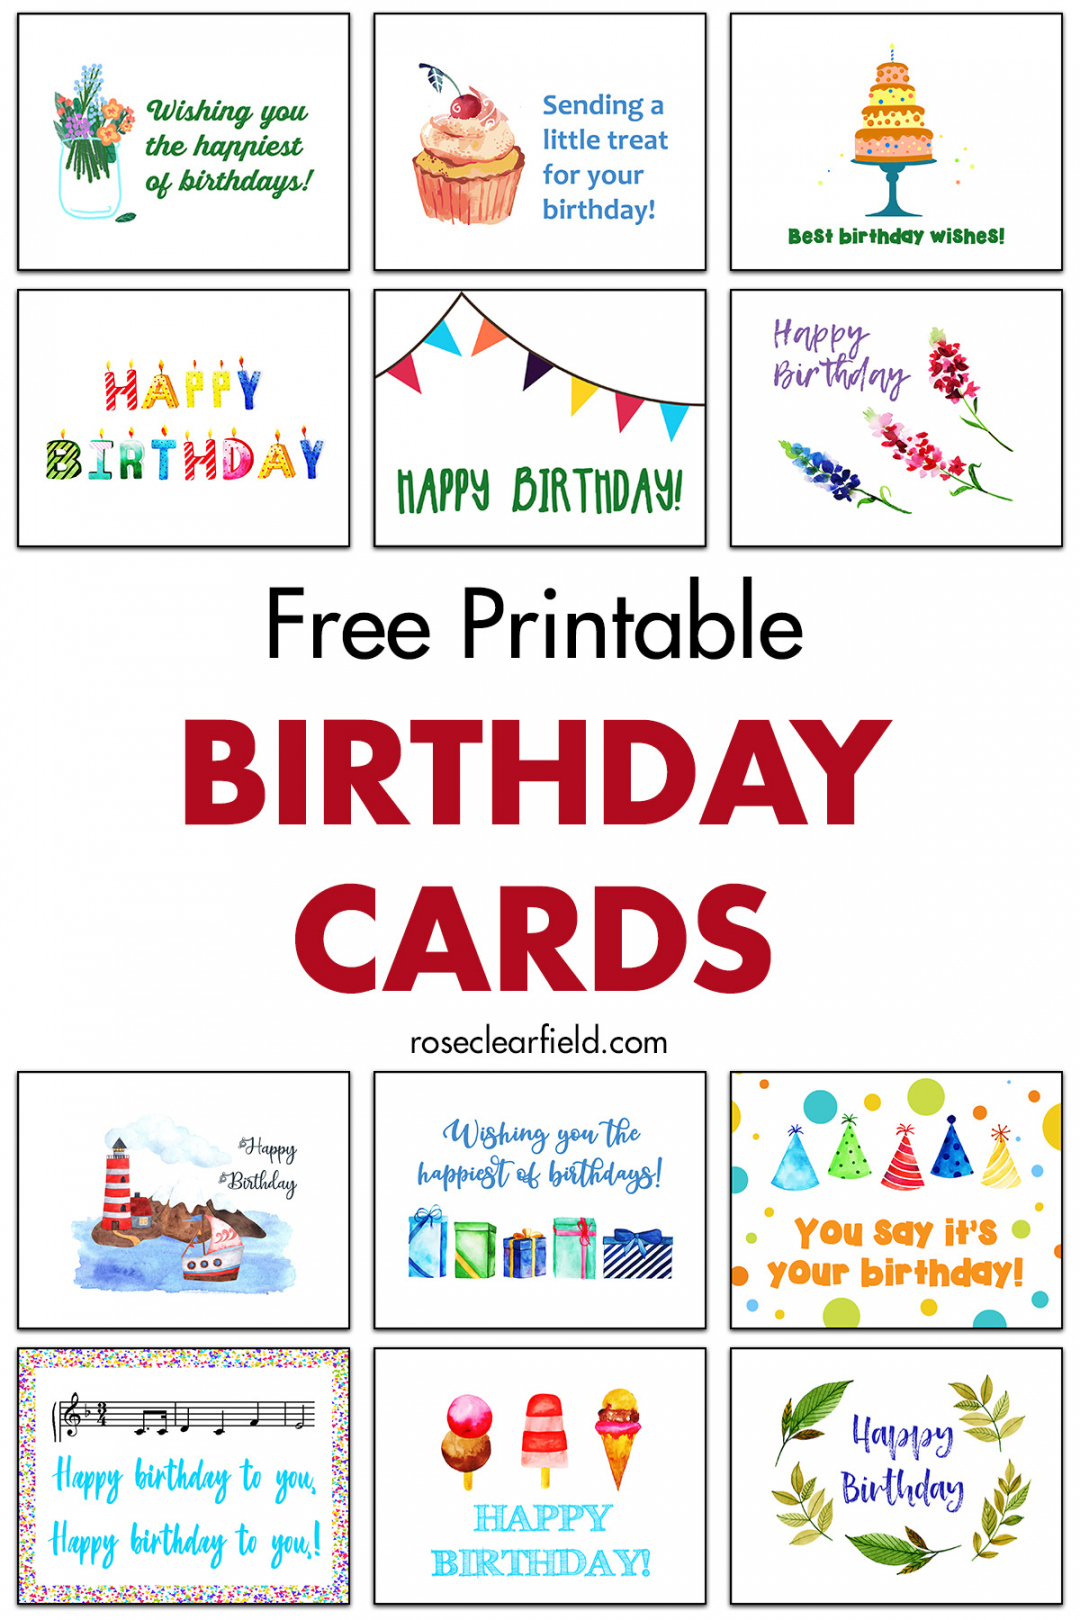 Free Birthday Cards Printable - Printable - Free Printable Birthday Cards - Rose Clearfield